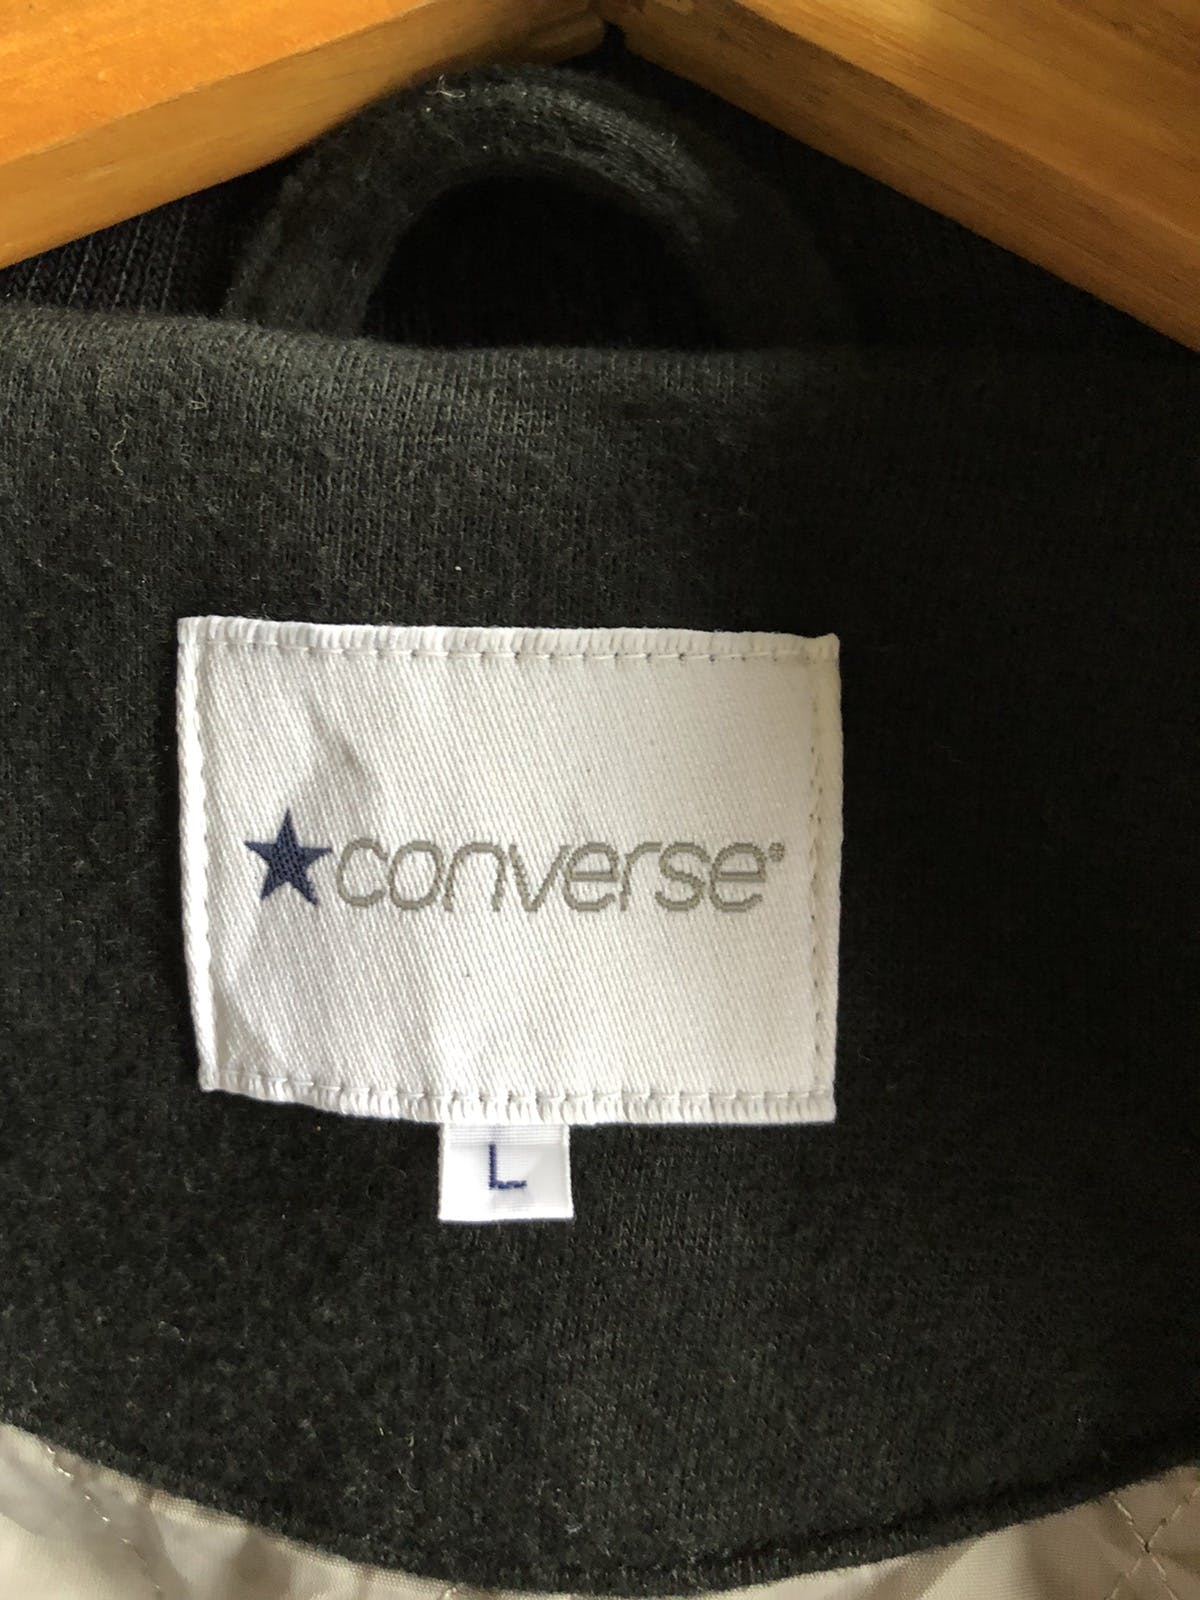 Converse Varsity puffy black jackets - 5